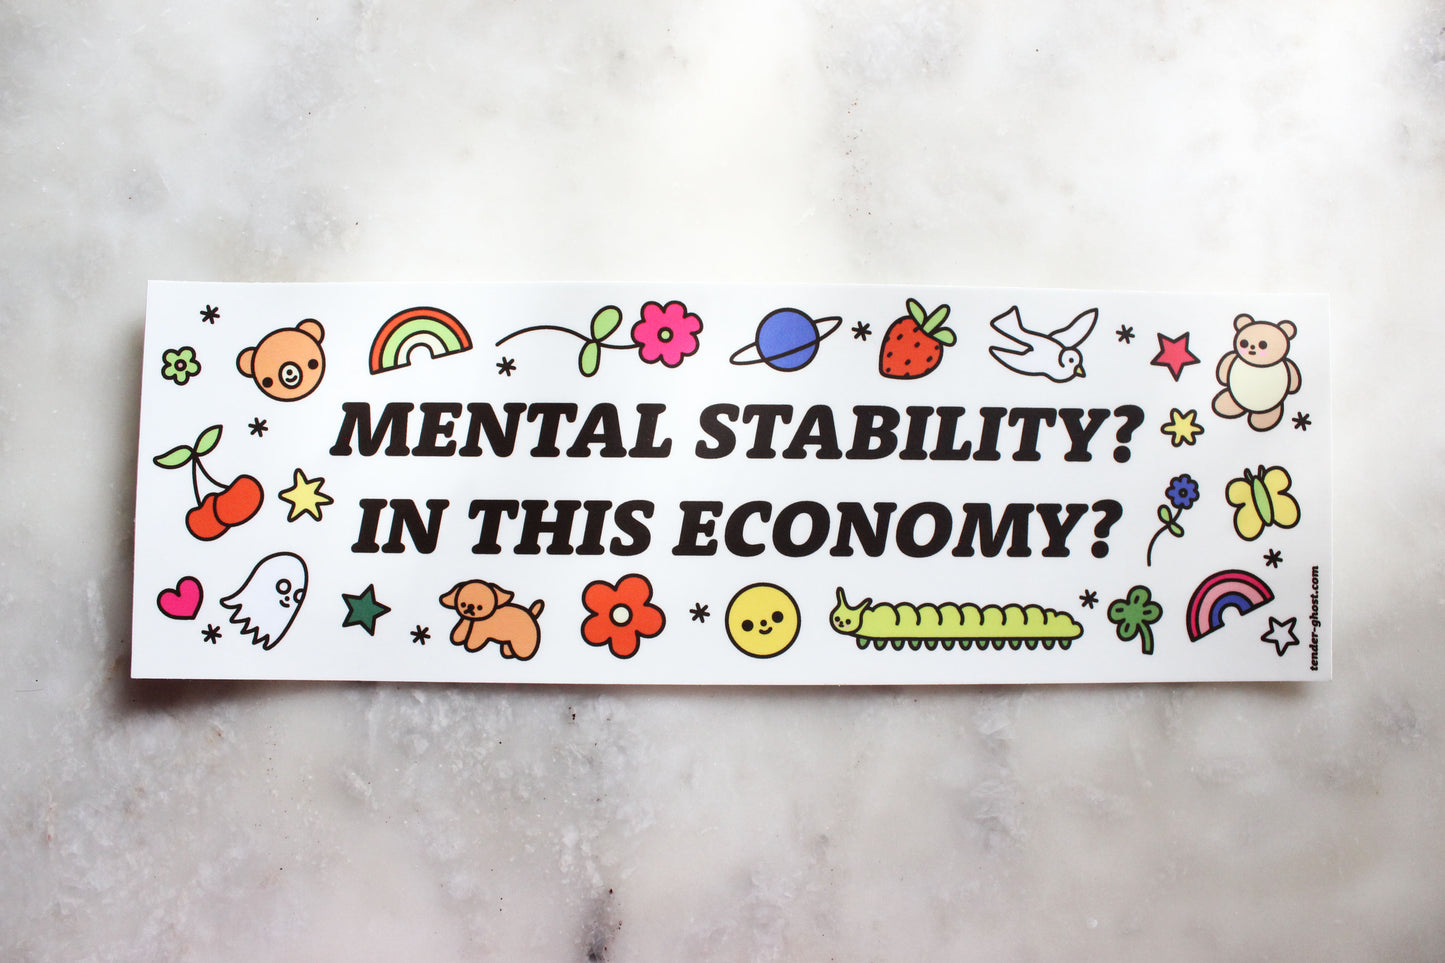 Mental Stability Bumper Sticker